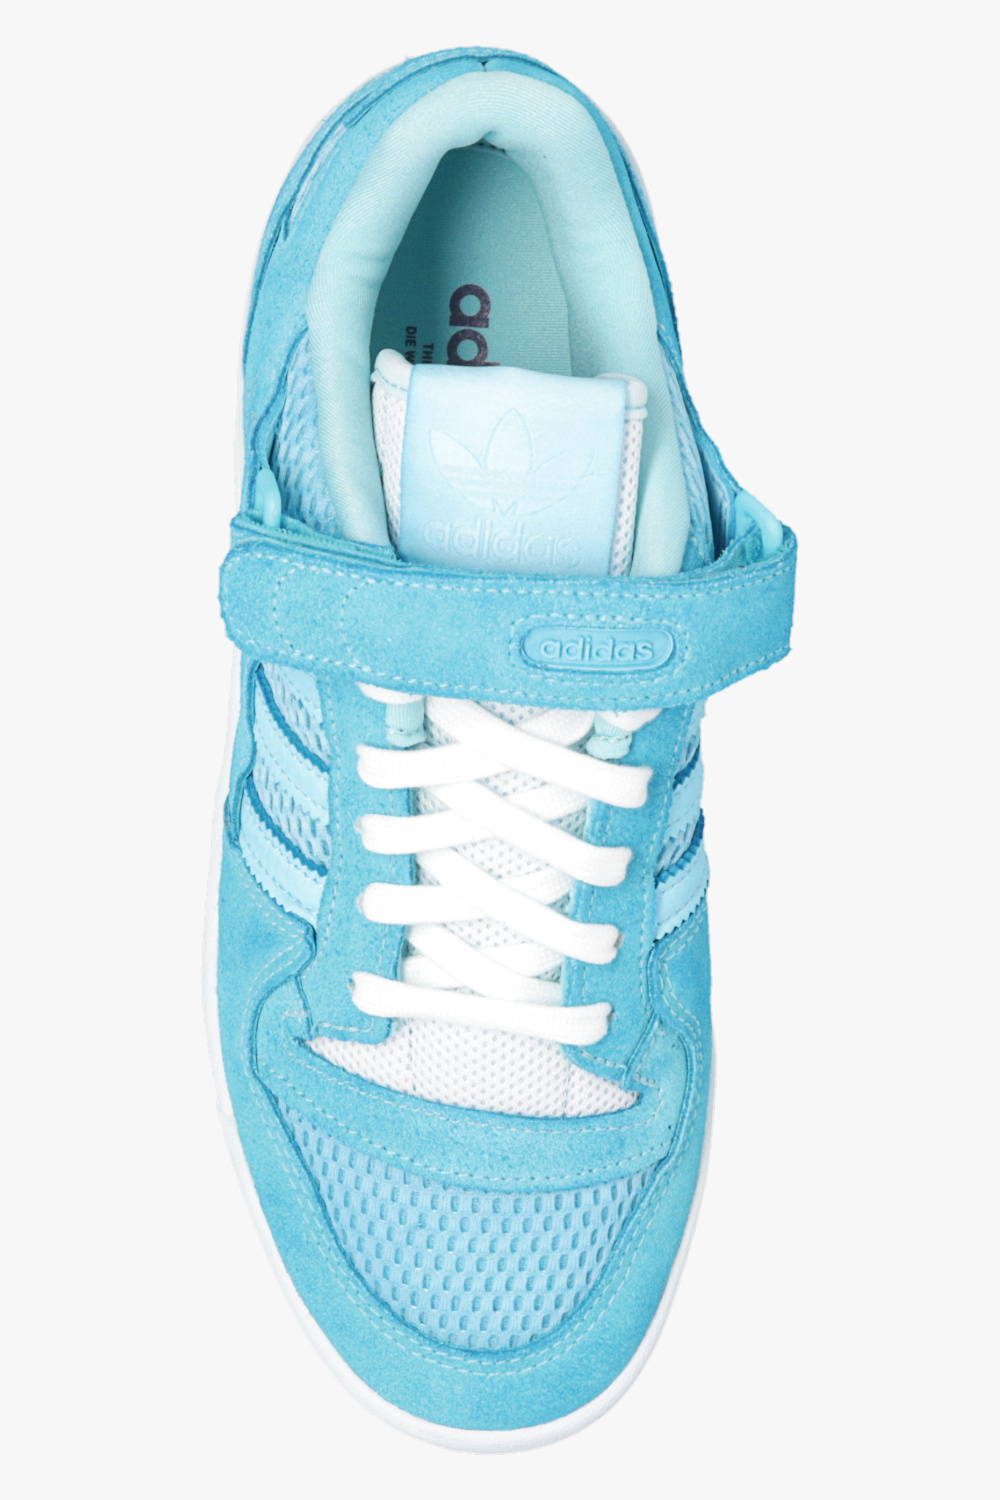 Blue \'Forum 84 Low adidas sneakers IetpShops Magugu Tennis Y-Tank 8K\' x Thebe Australia New Top - Originals ADIDAS - York